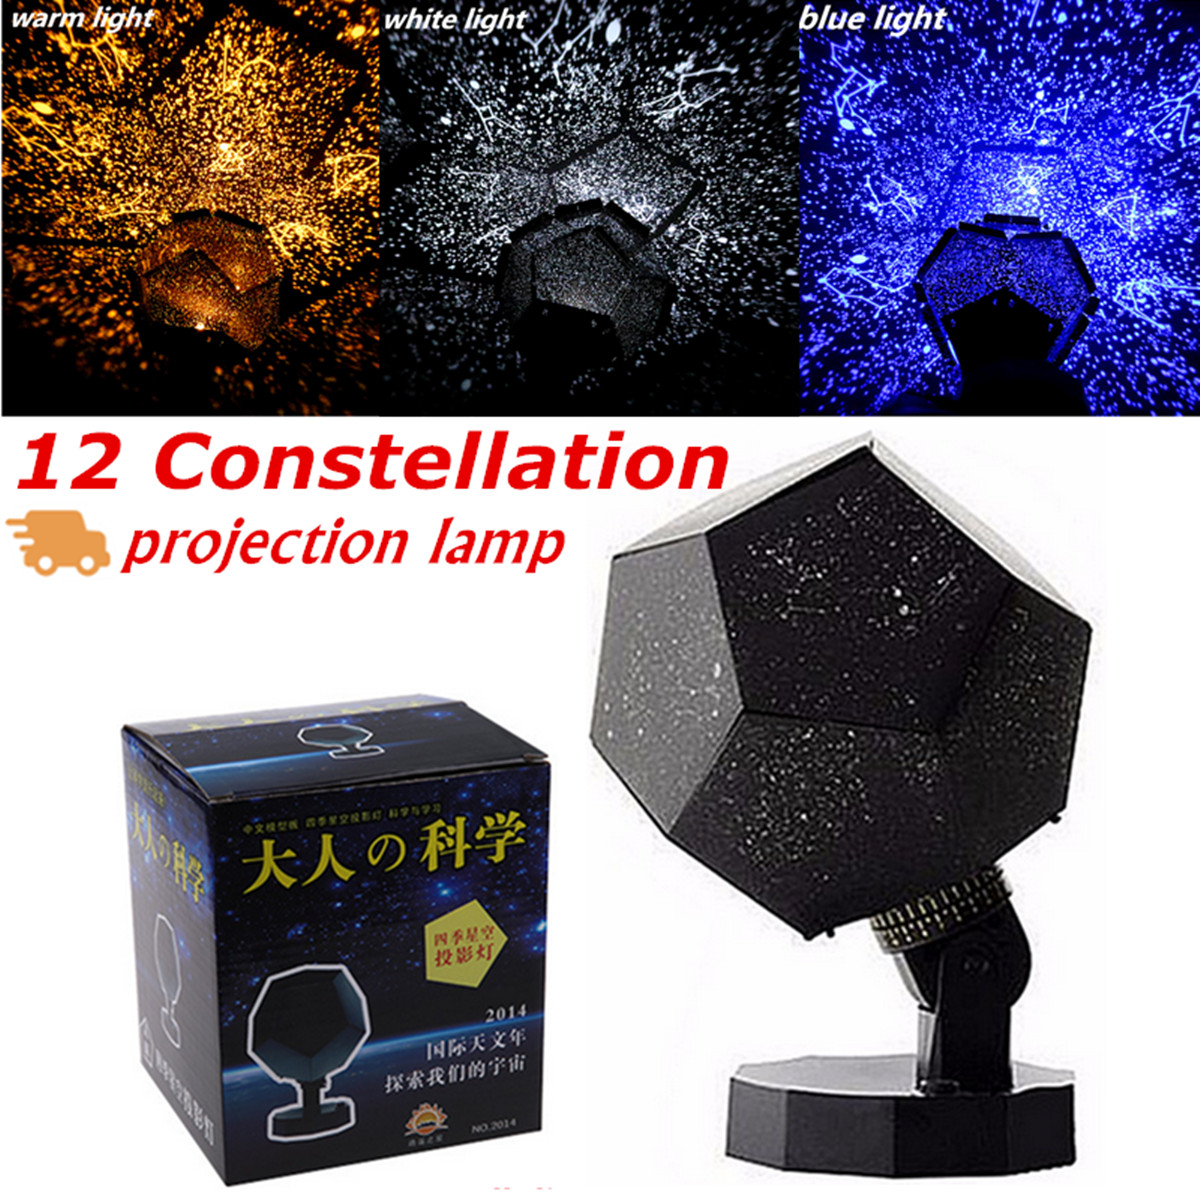 Home-Decor-Romantic-Astro-Star-Sky-Laser-Projector-Cosmos-Night-Light-Lamp-Gift-Toys-1635563-1